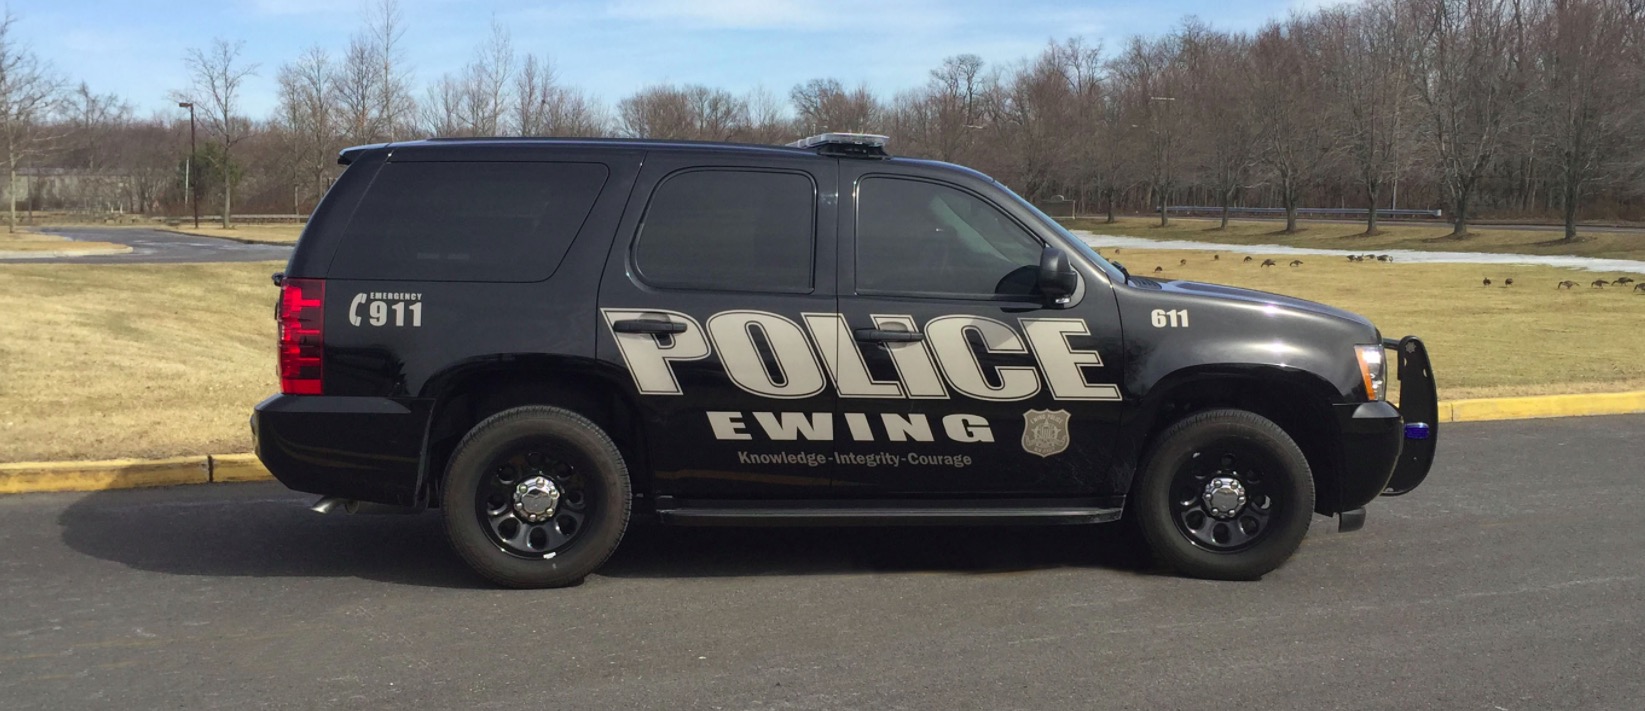 Ewing police patrol car